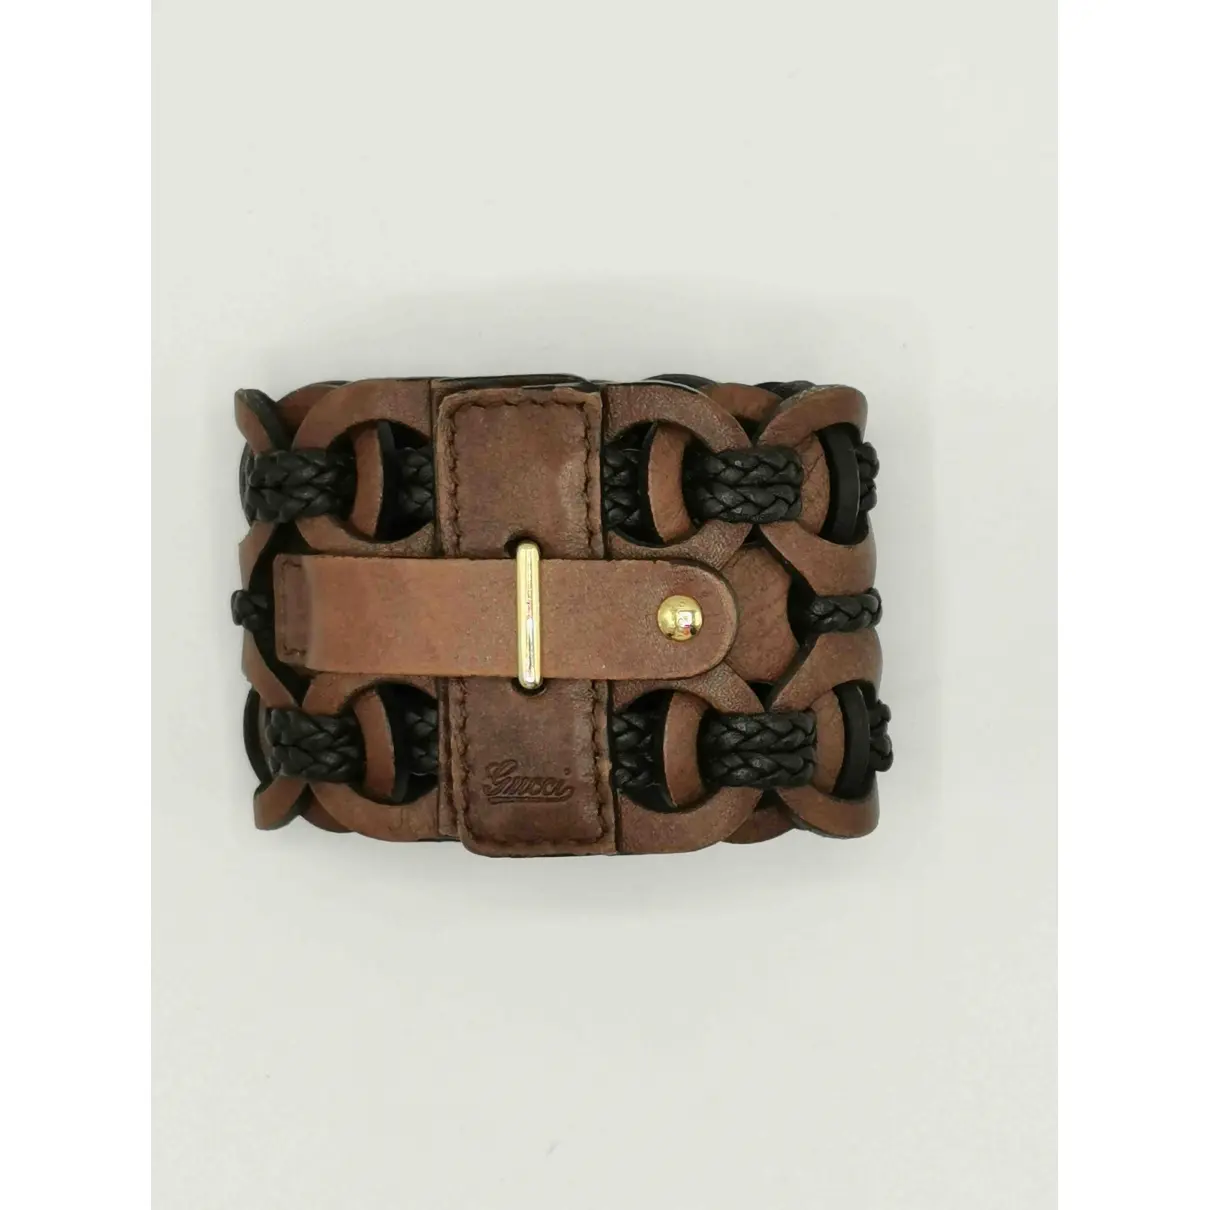 Buy Gucci Leather bracelet online